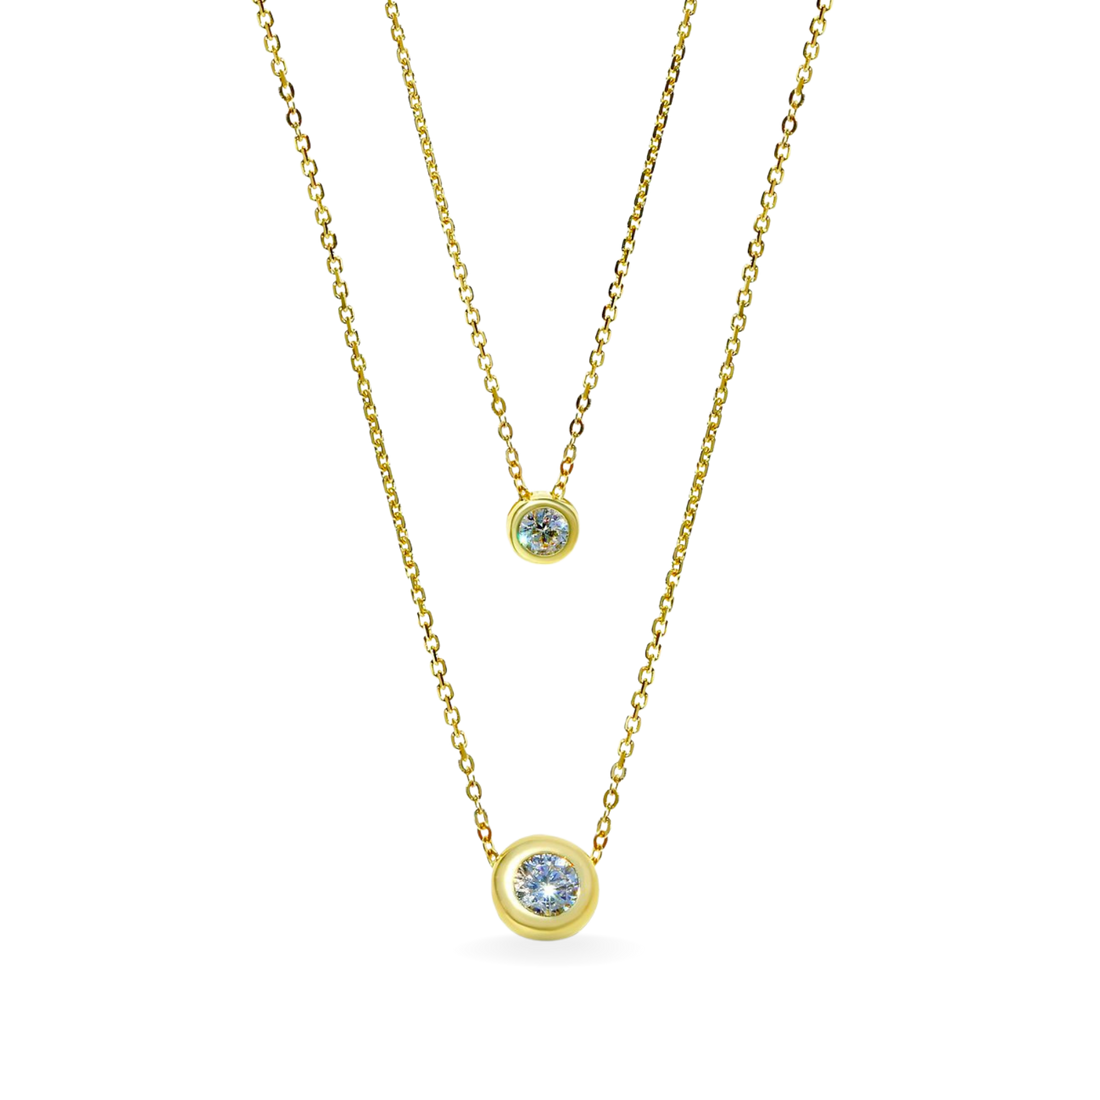 gold chain necklace toronto, womens jewelry toronto, dainty jewelry canada affordable